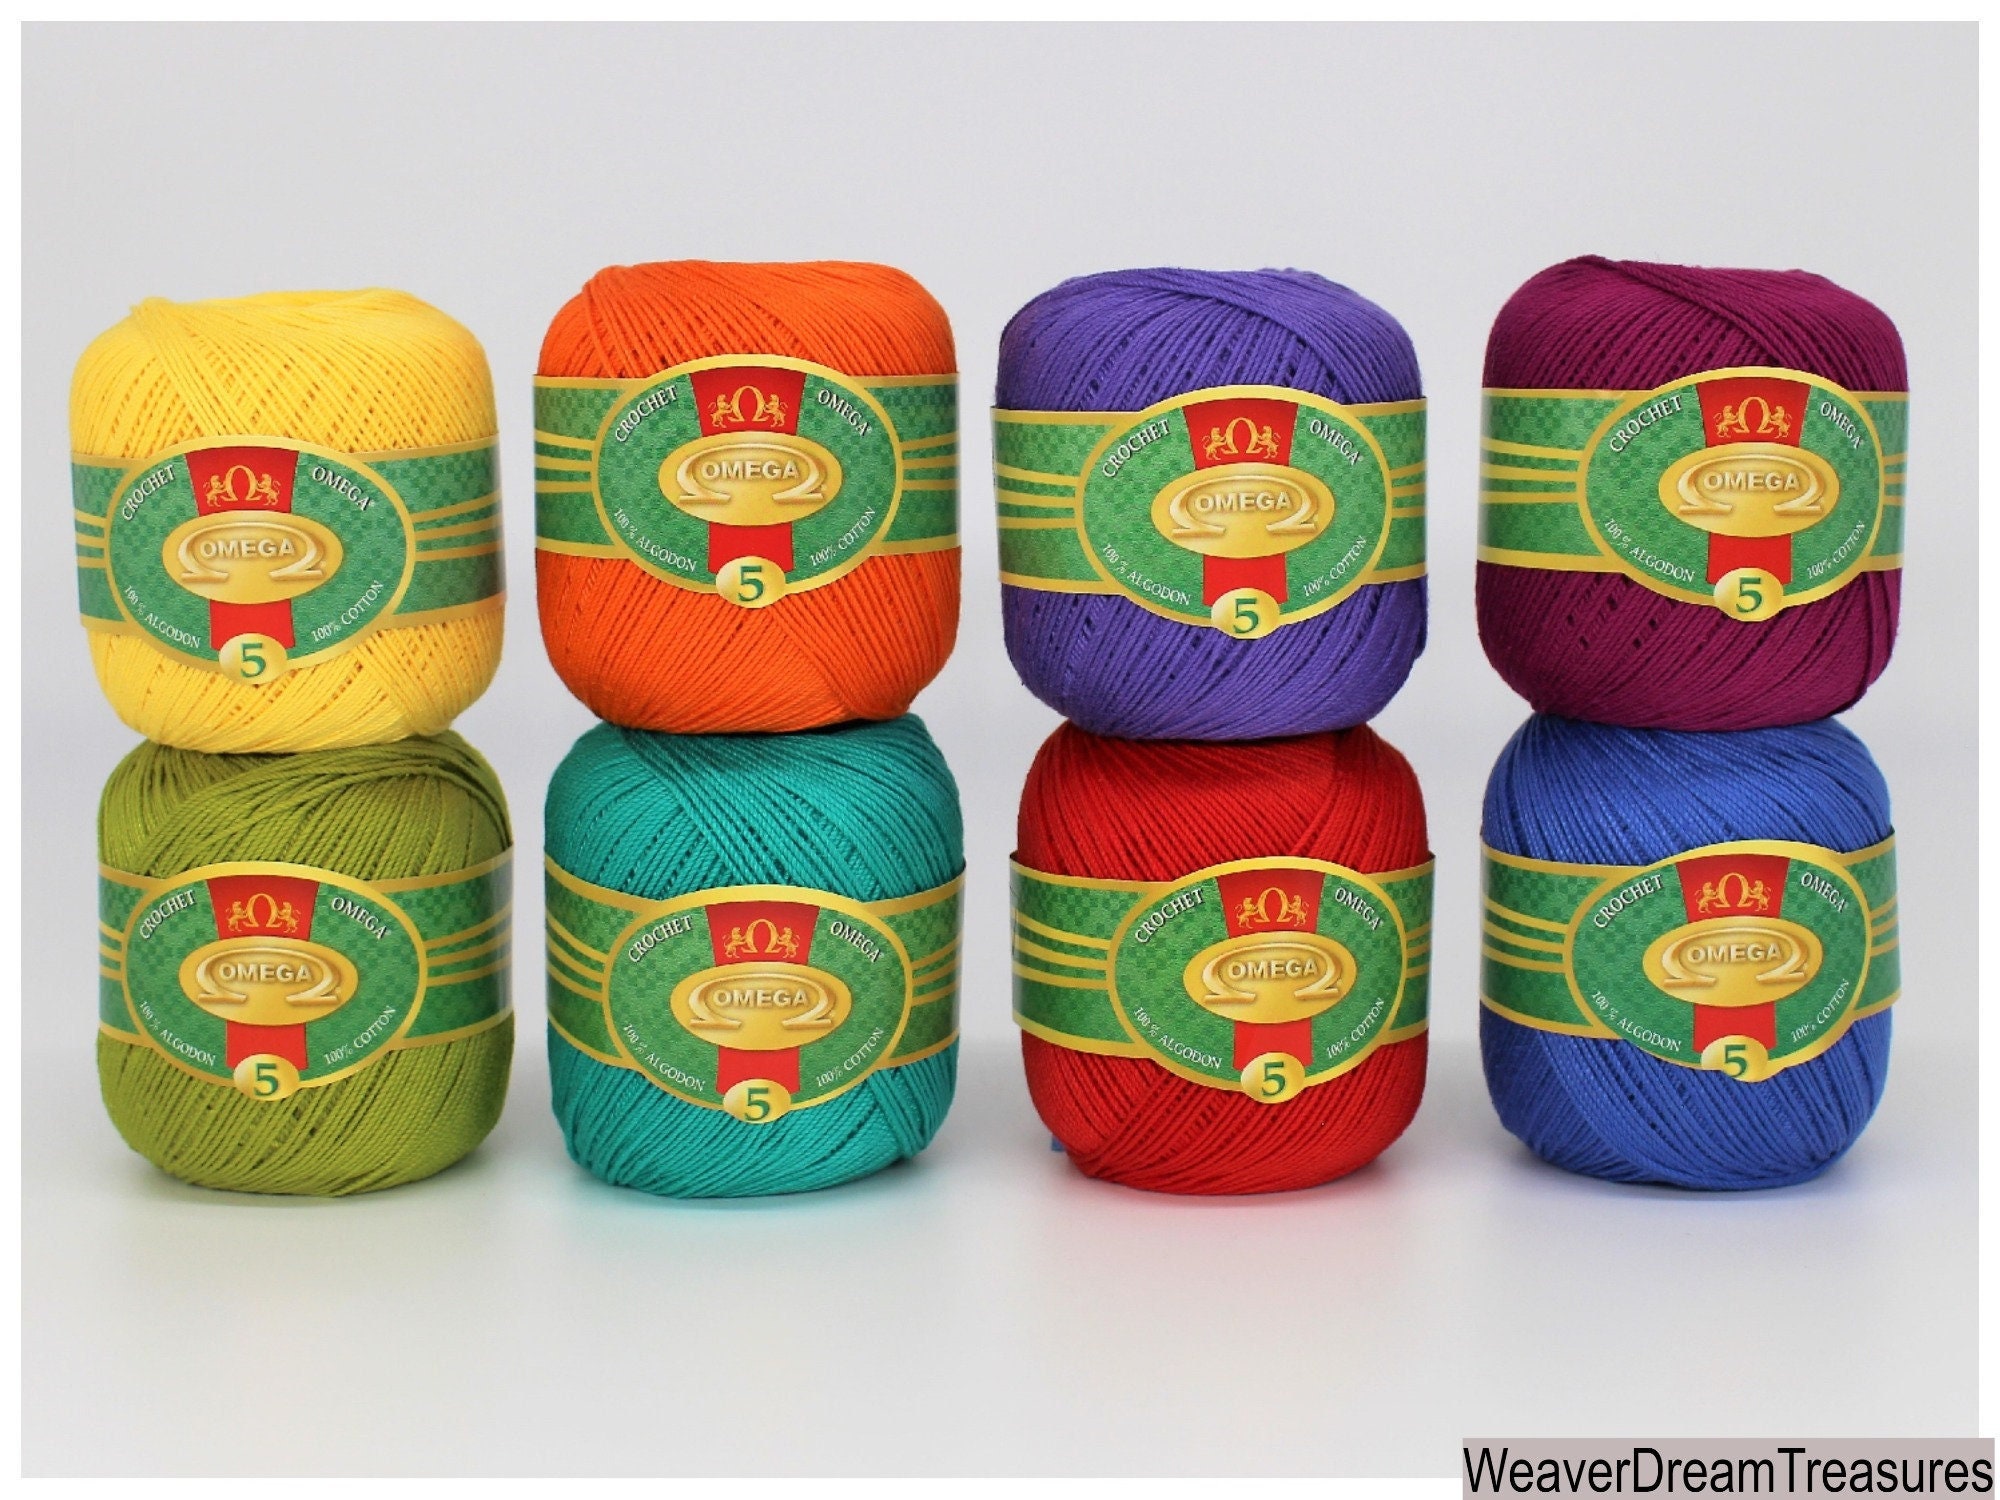 La Perla [50grs] - Omega, 0 - Lace - 100% Mercerized Cotton Yarn